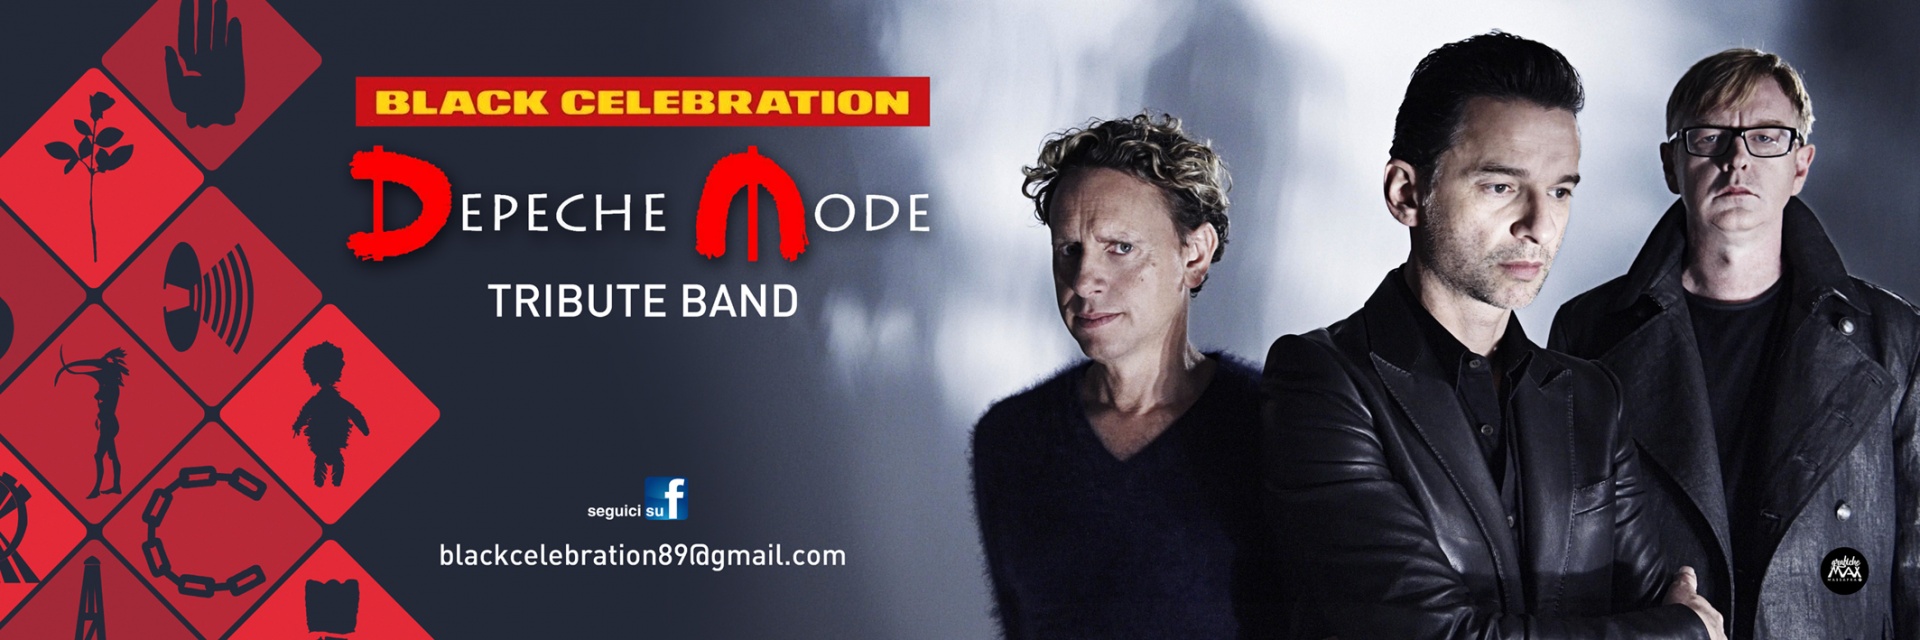 Black Celebration - Depeche Mode Tribute